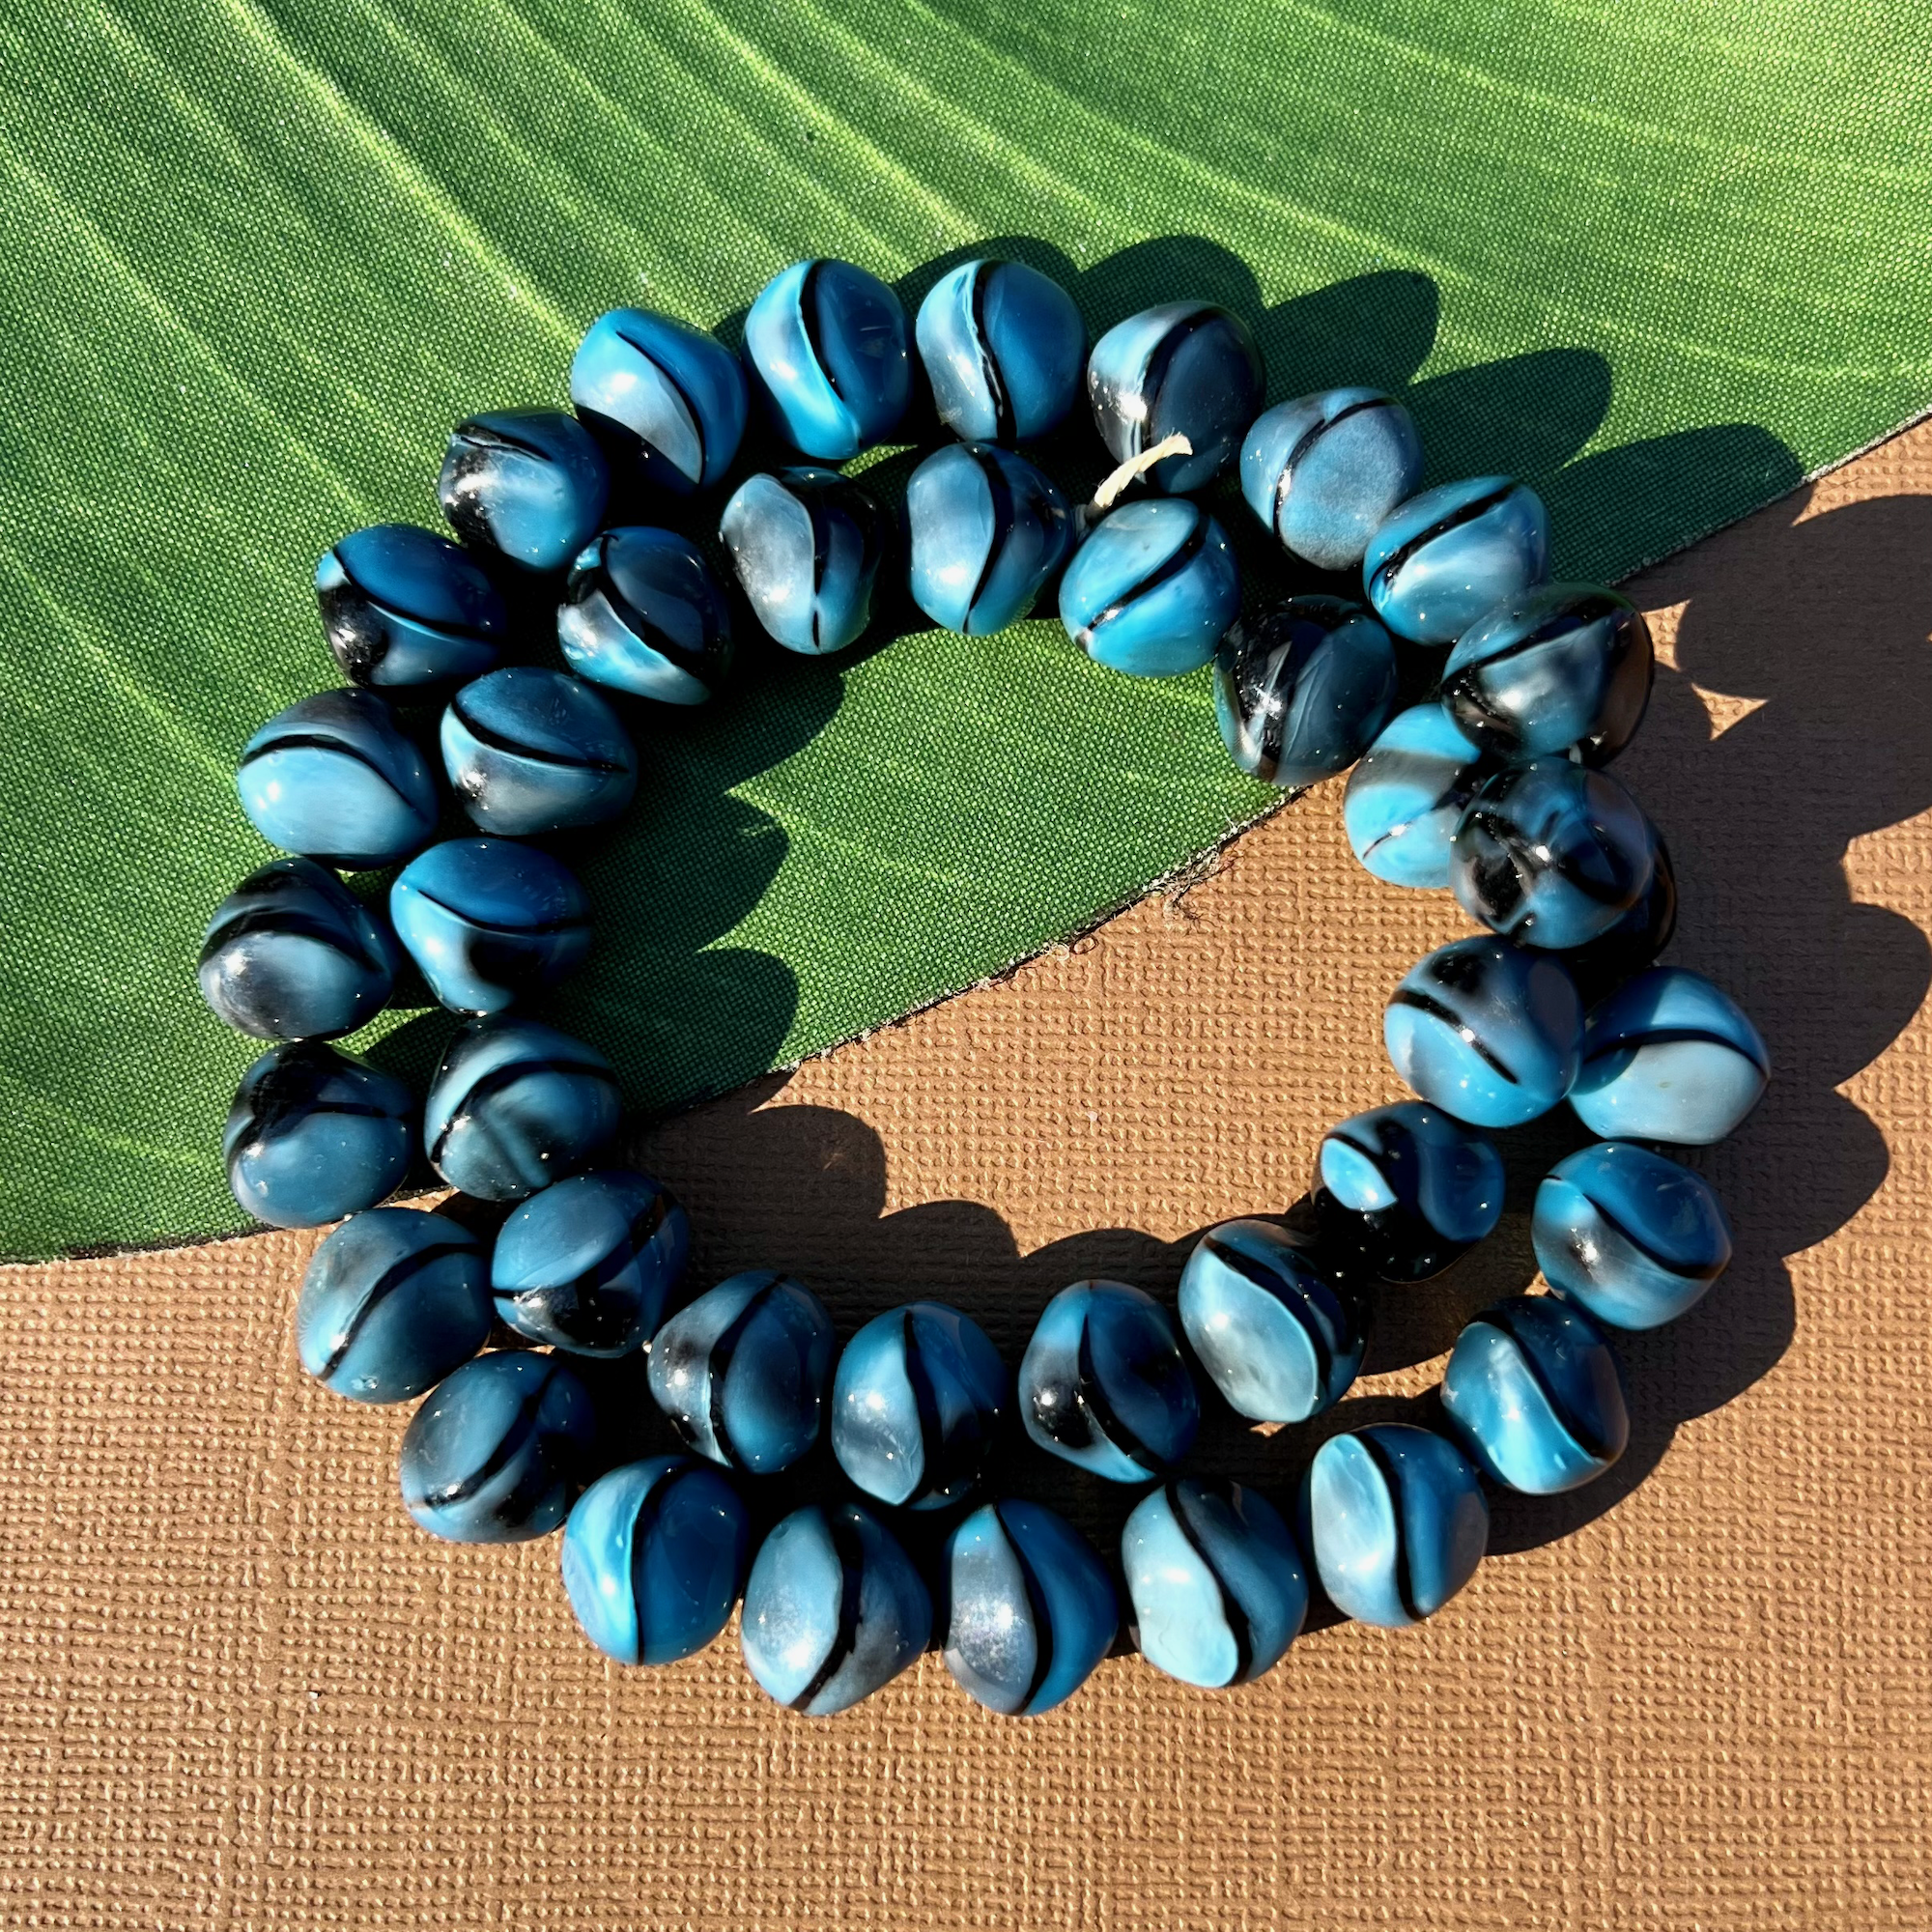 Blue Organic Round Beads - 40 Pieces